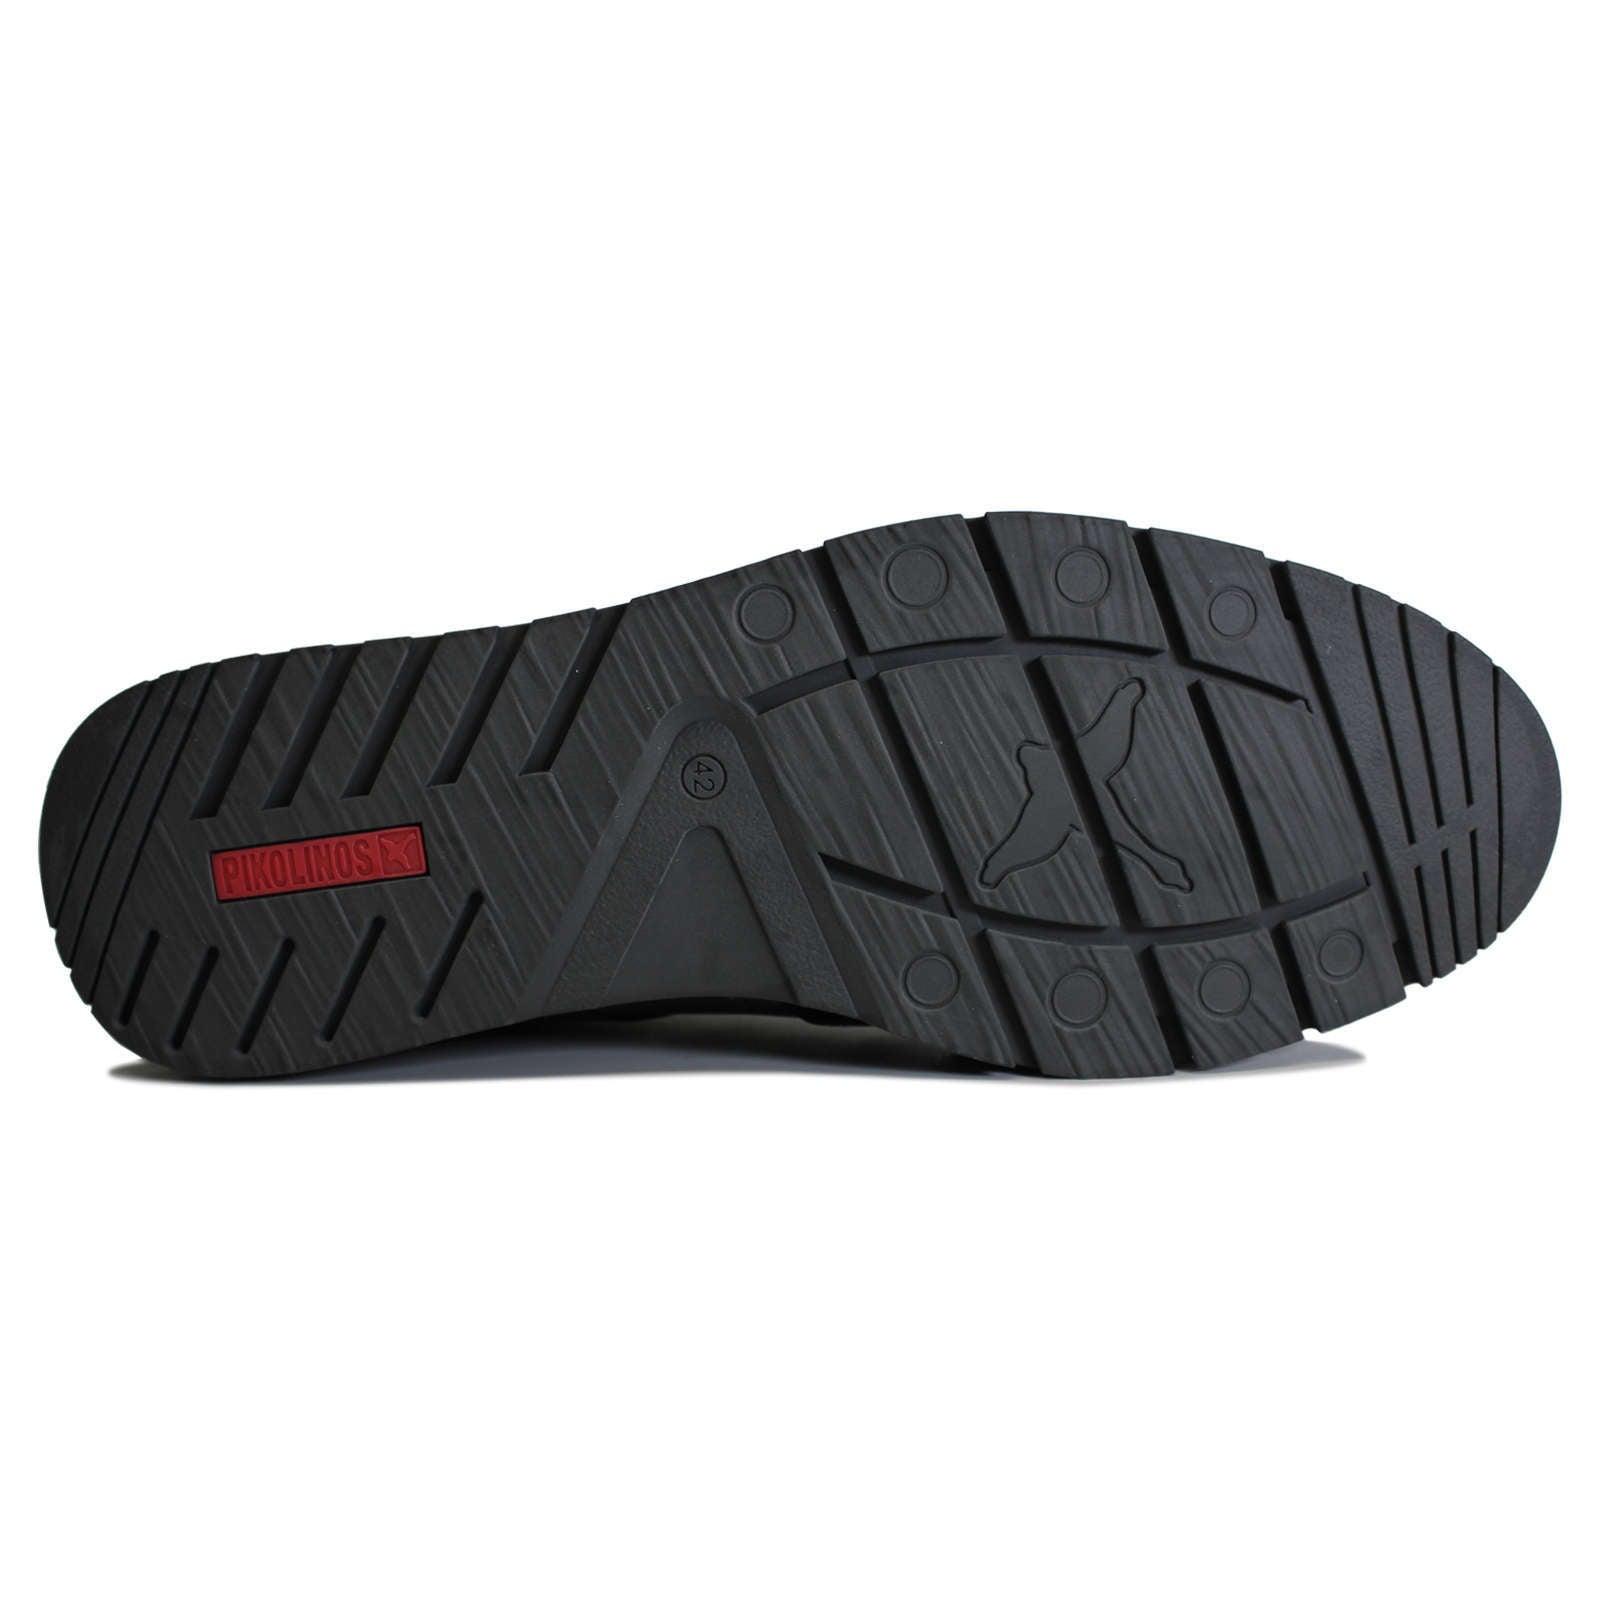 Pikolinos Alarcon M9T Leather Mens Sneakers#color_black